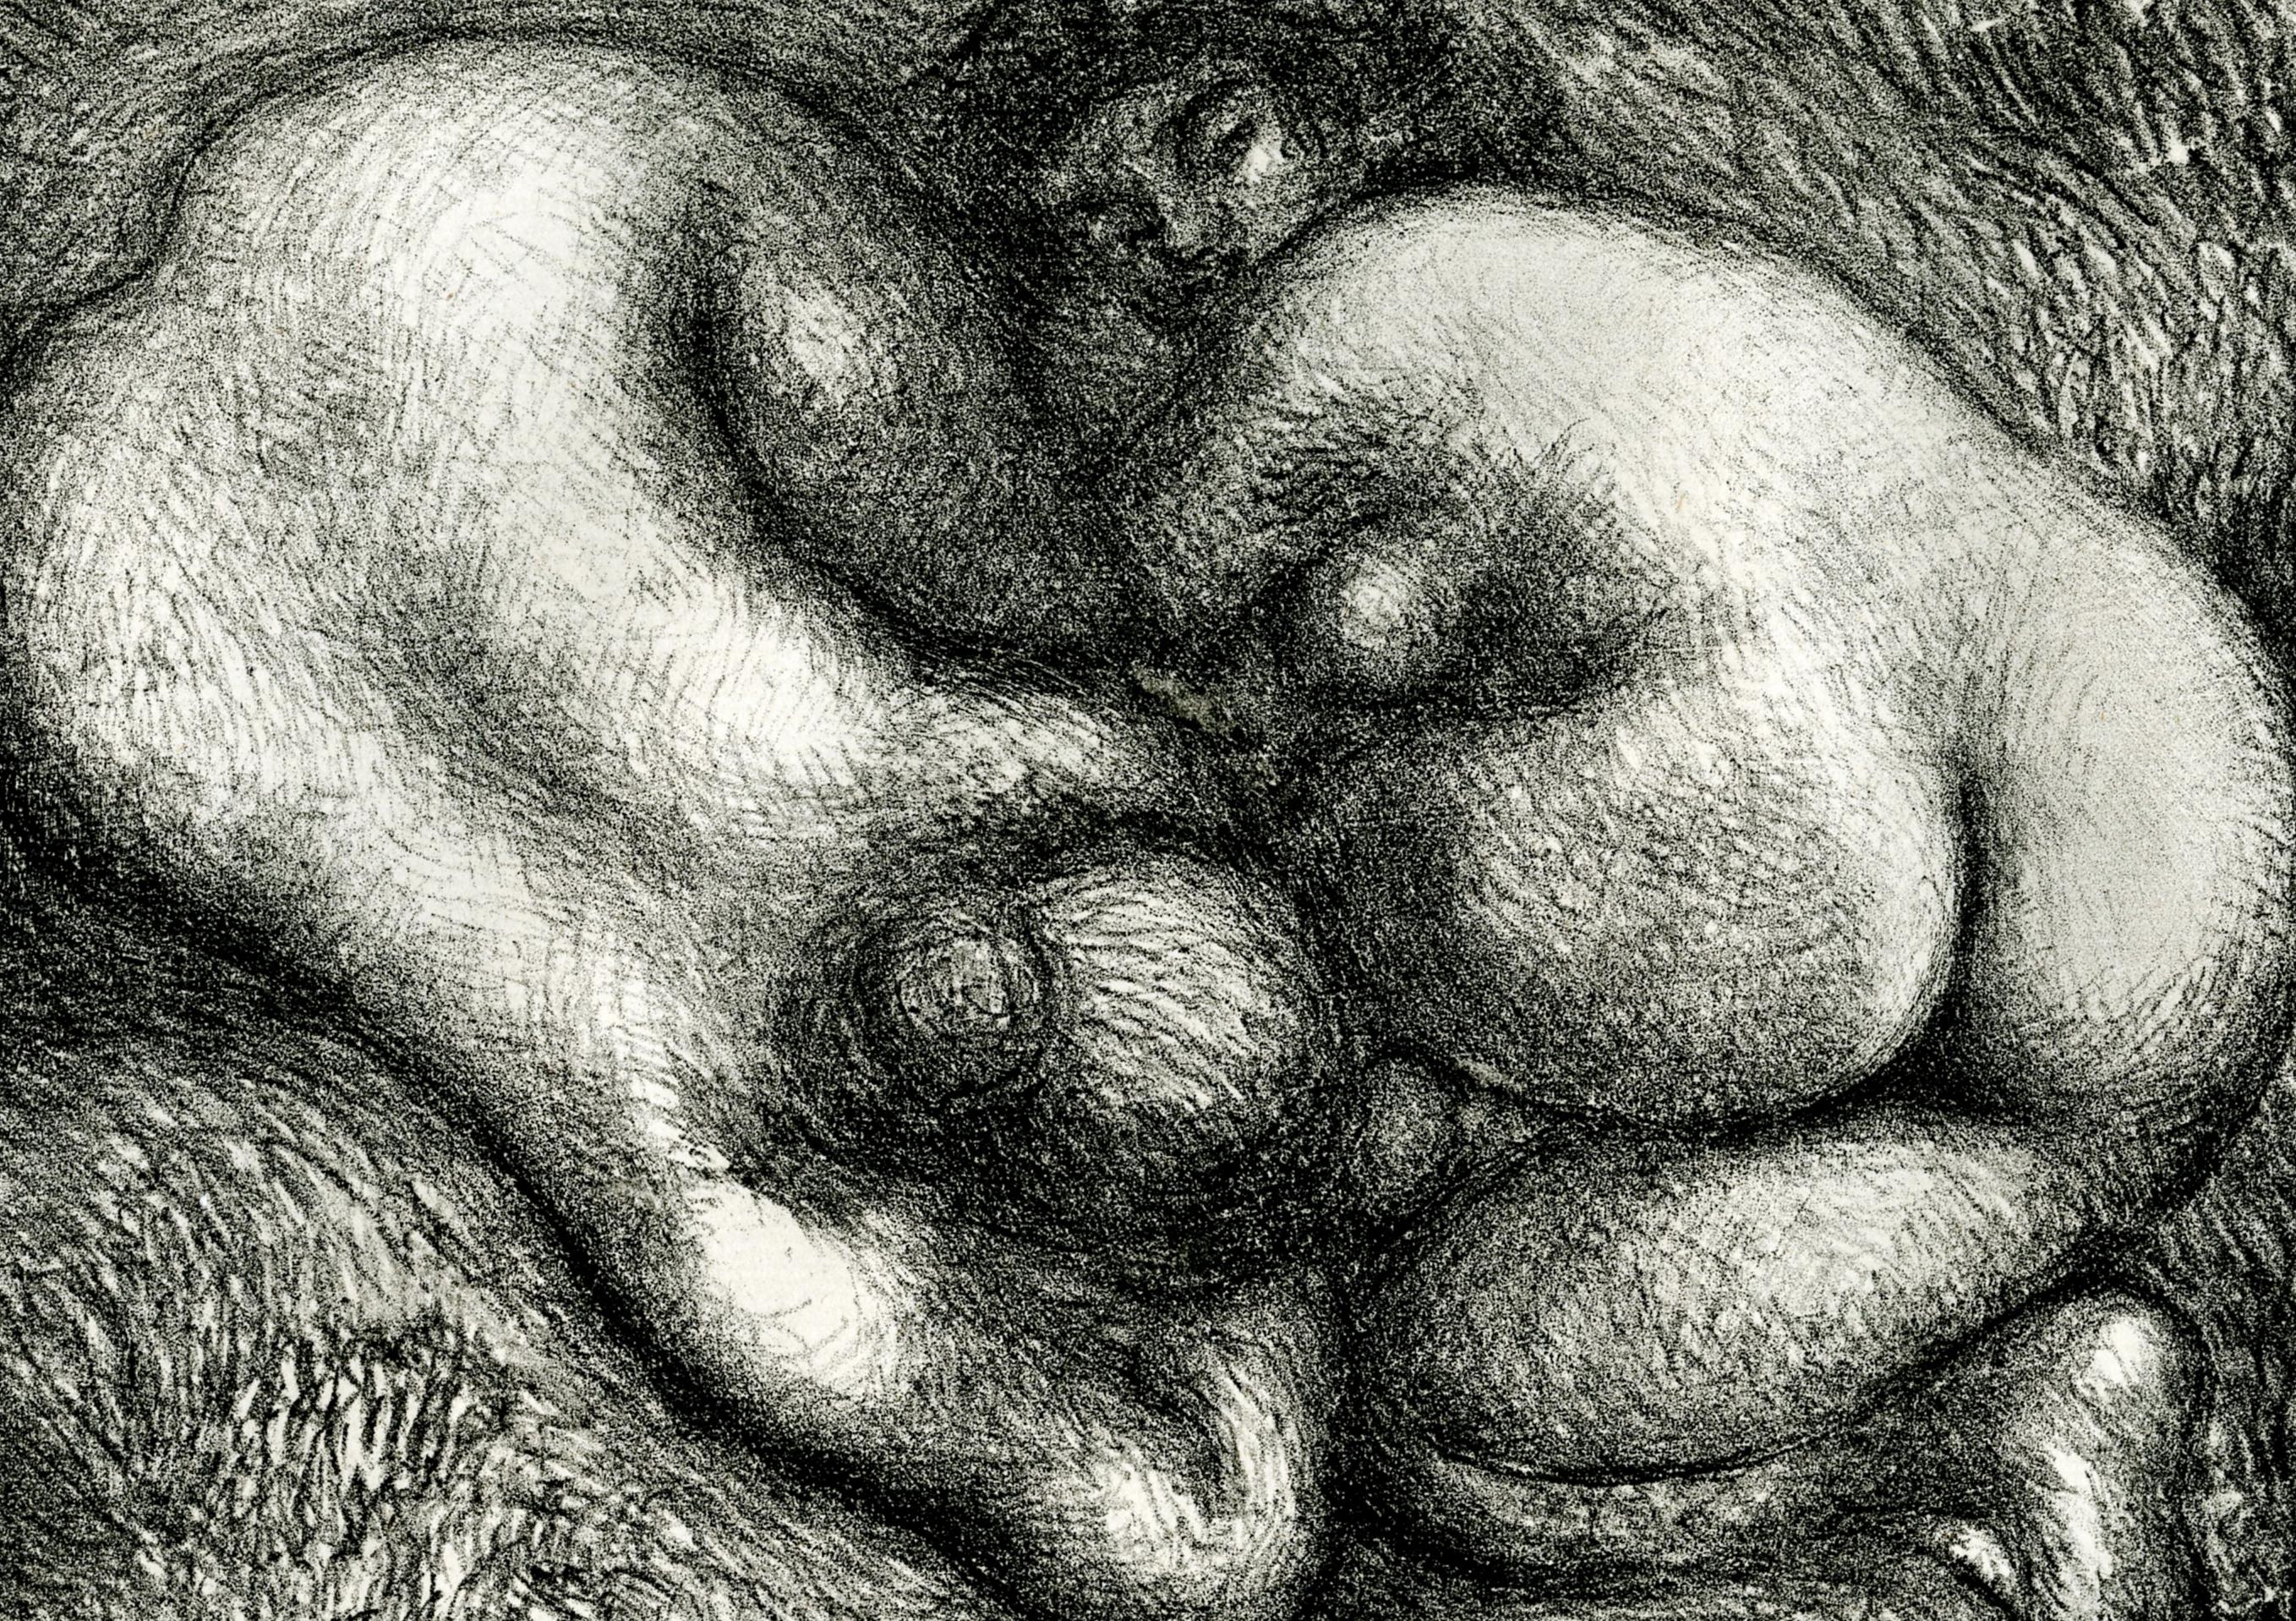 Deux Femmes Dans L'Herbe
Lithograph, 1926
Monogramed in pencil, 